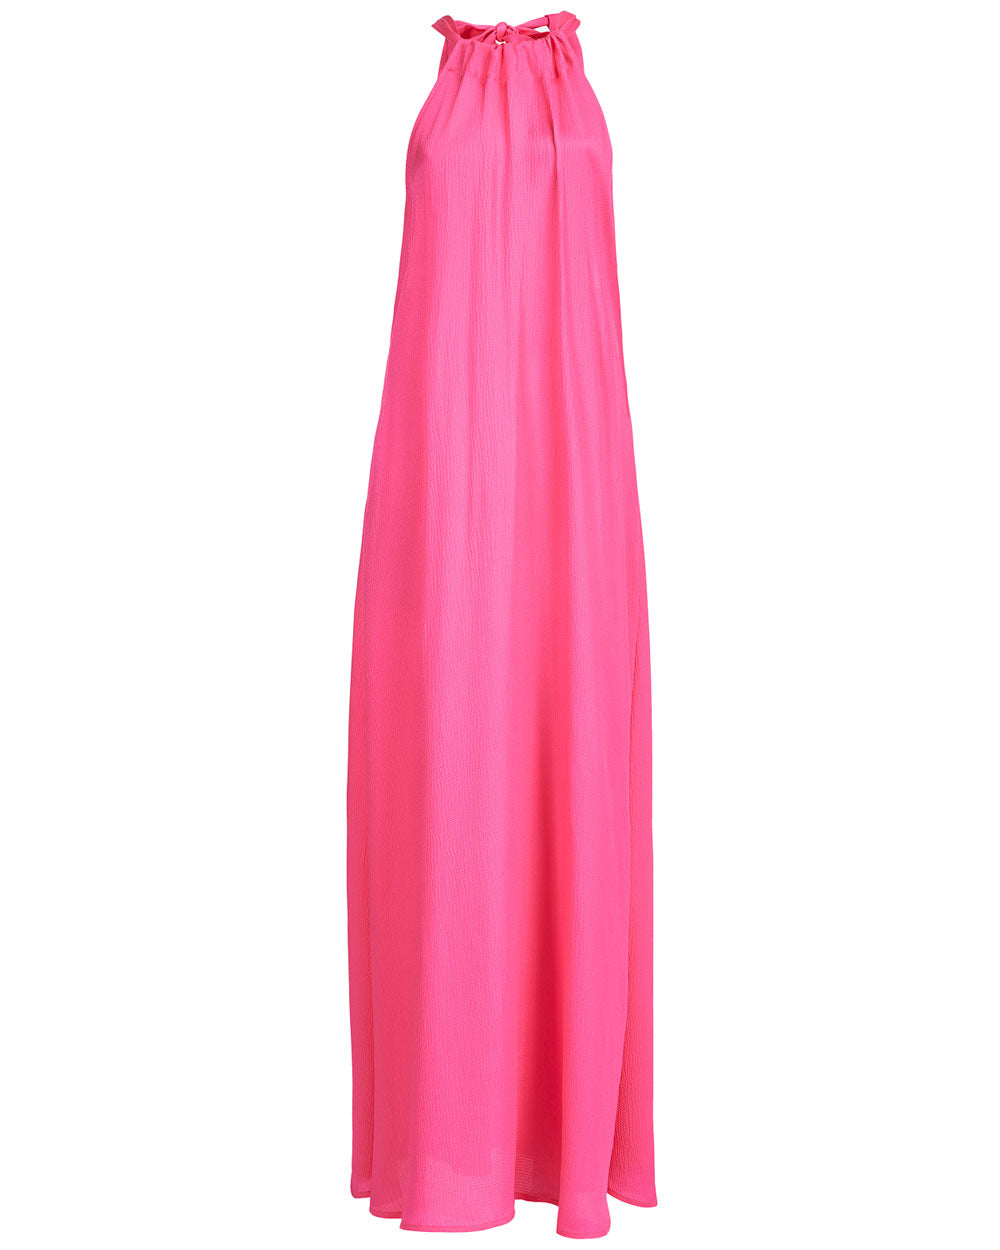 Neon Pink Baxos Sleeveless Maxi Dress